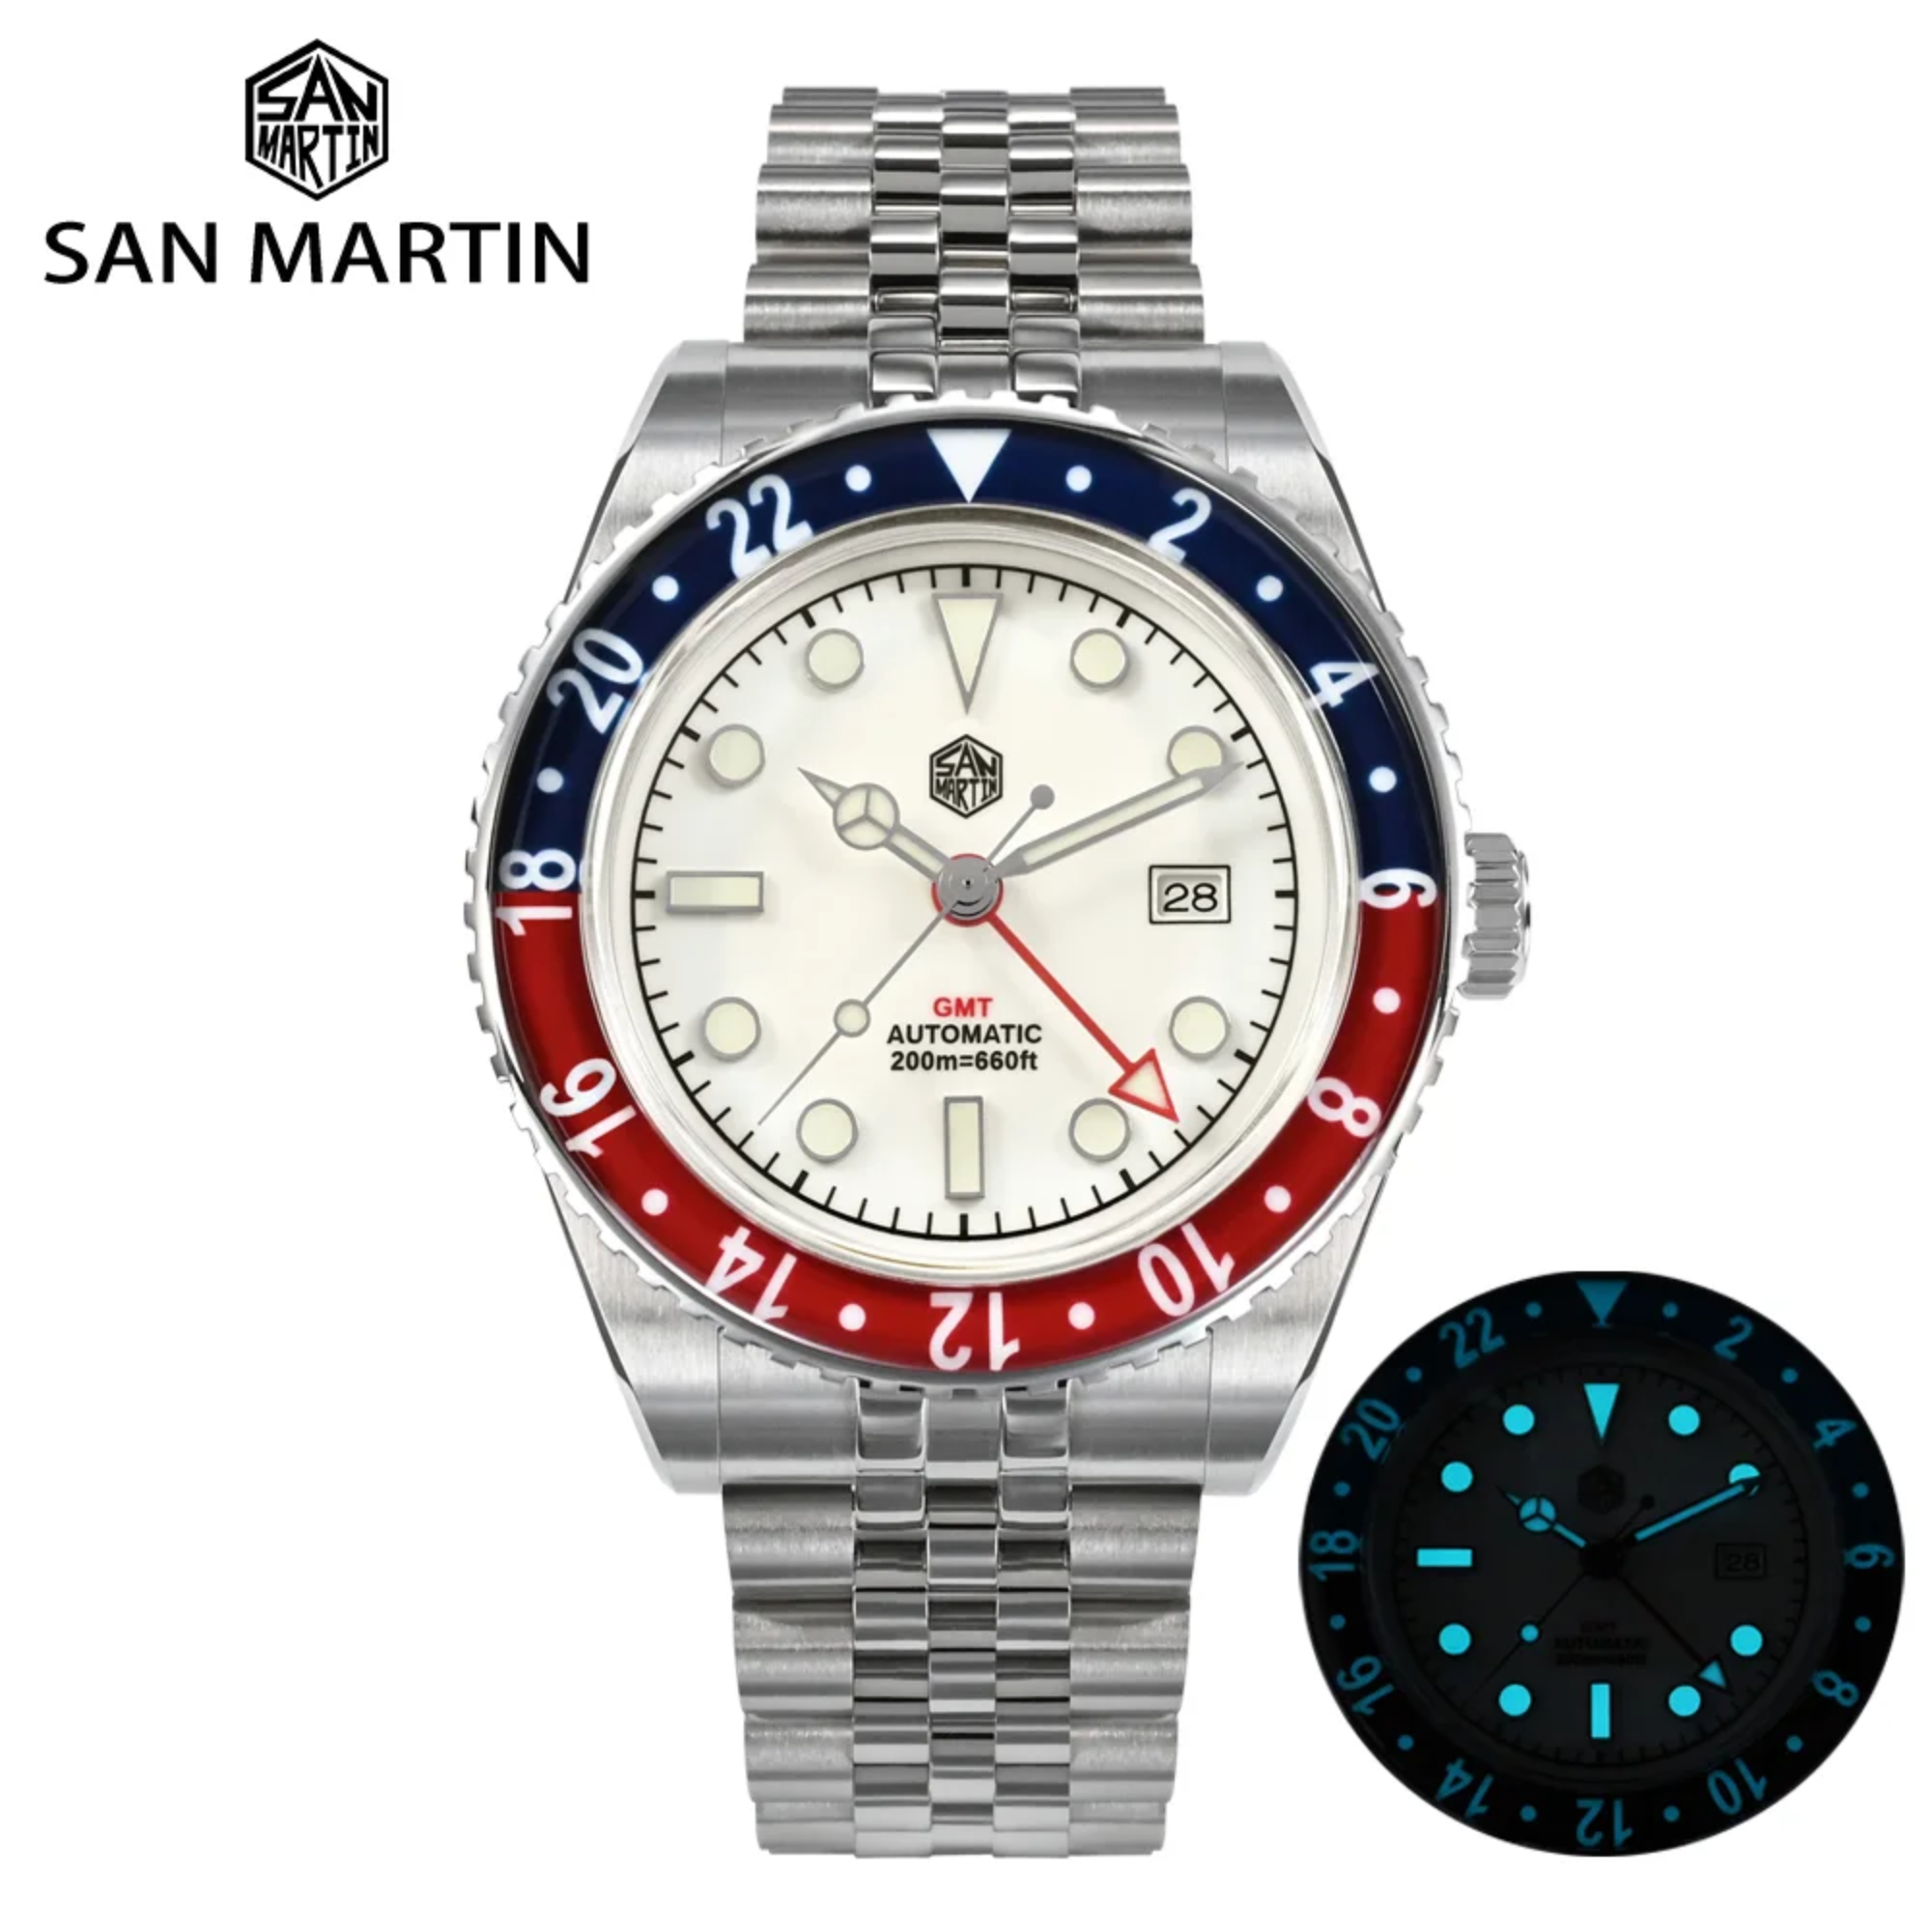 San Martin Vintage GMT Watch SN005-G4 - White san martin watches india online